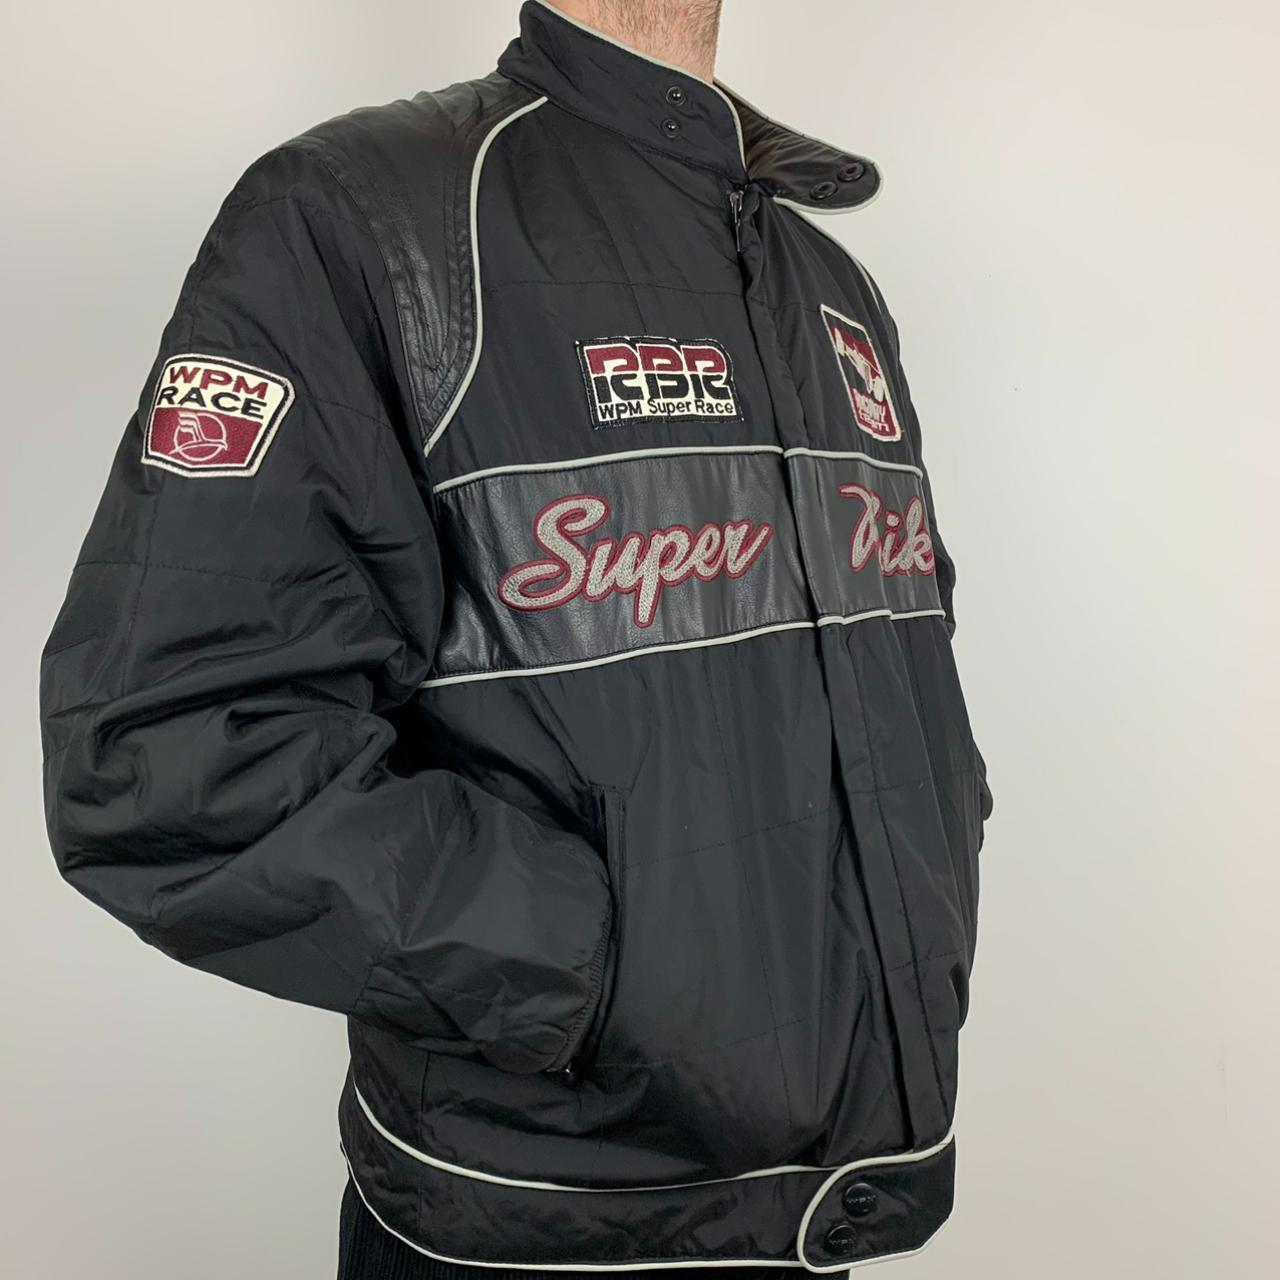 Item: Super bike / Motor cross racing jacket /... - Depop